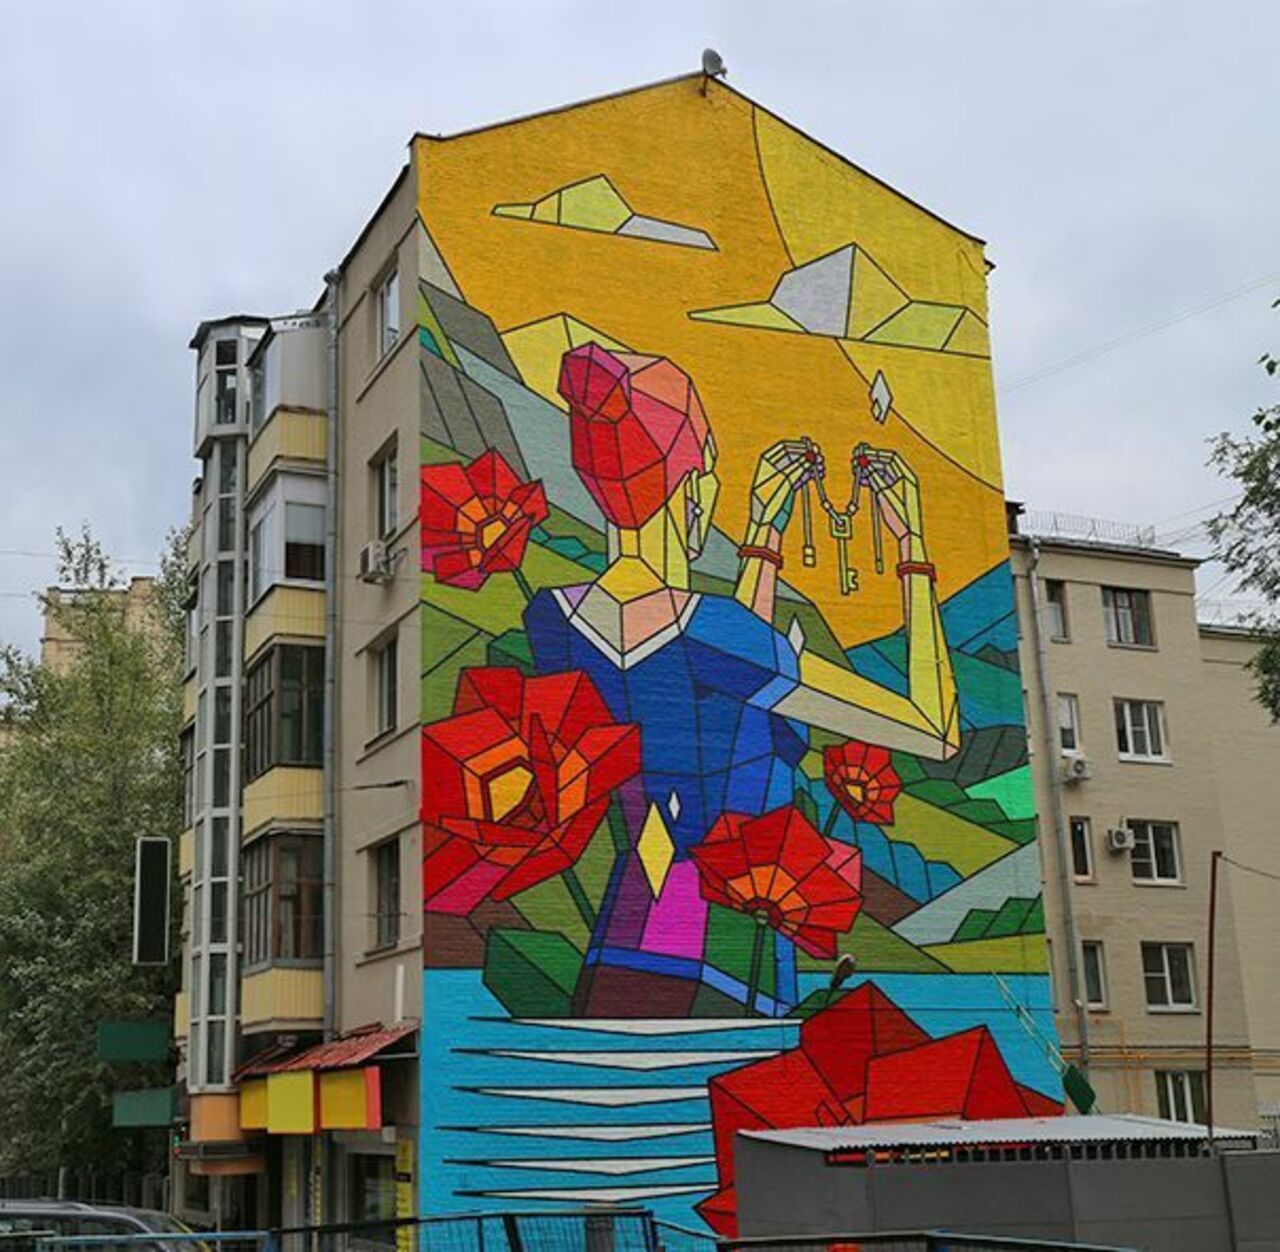 Aske#mural #streetart #art #graffiti https://t.co/Z0MJOqKjRy